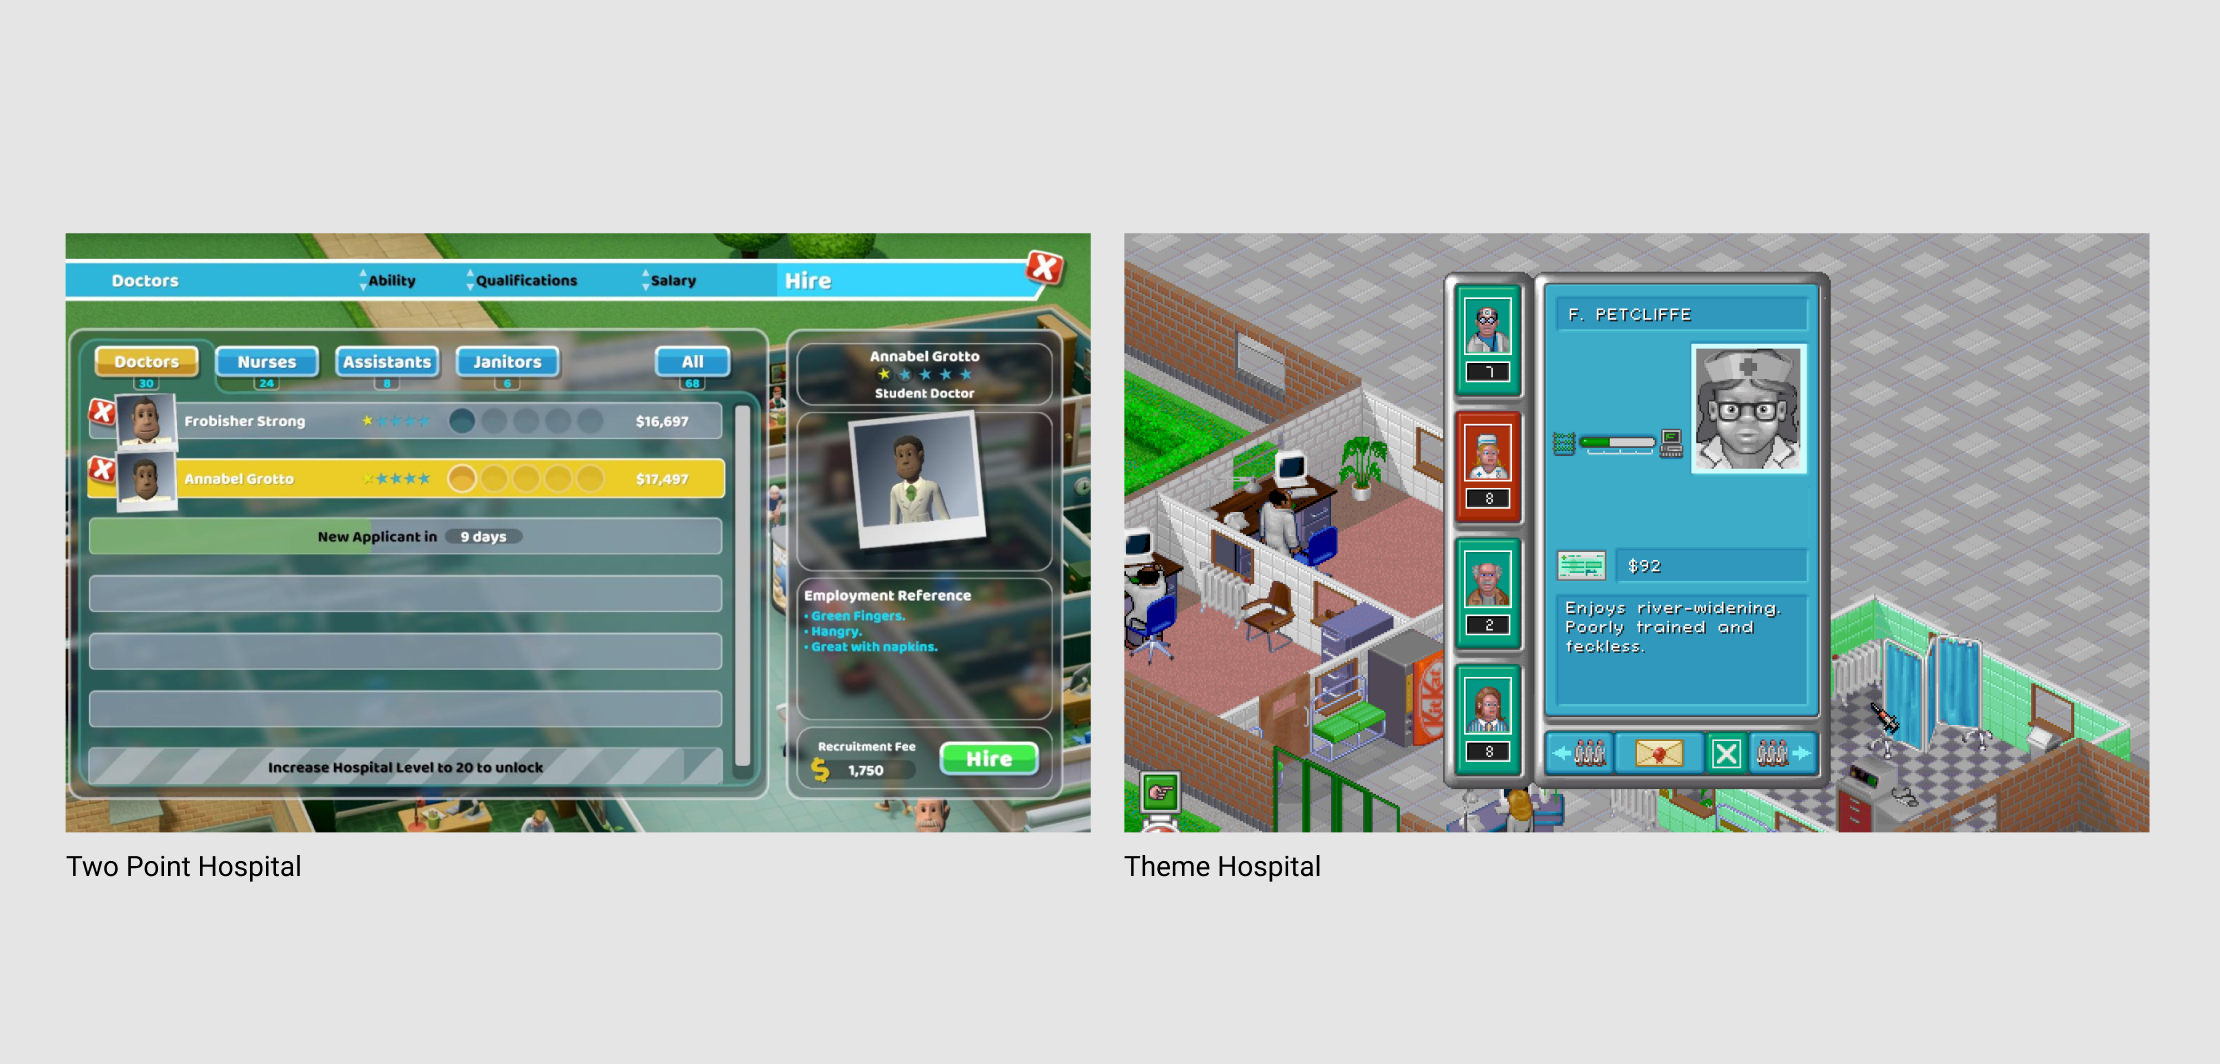 Screenshots of Two Point Hospital and Theme Hospital